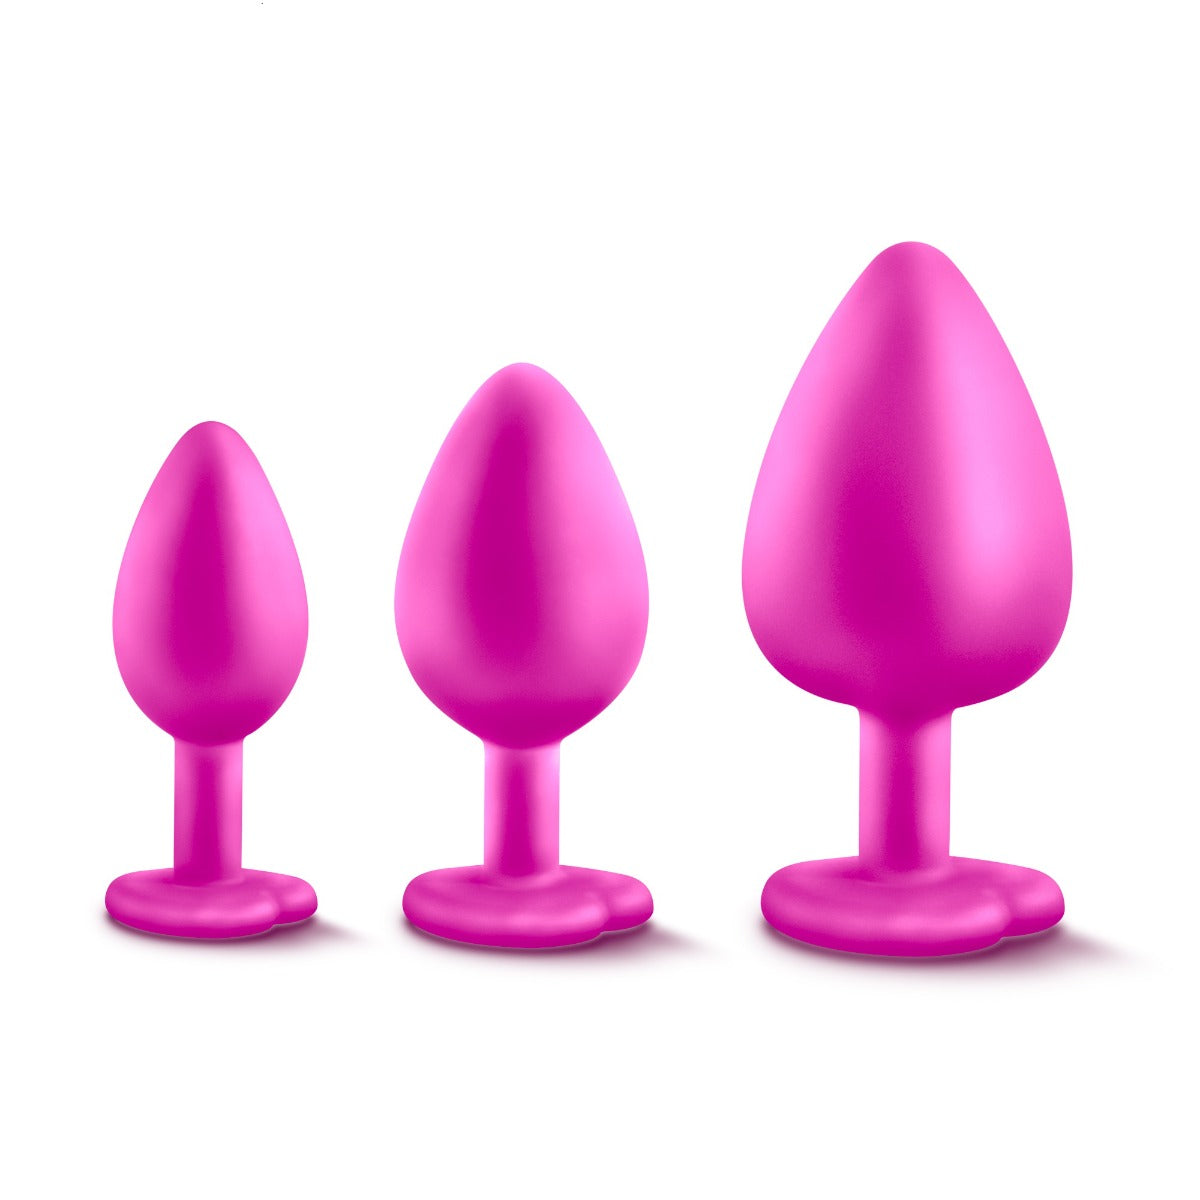 Luxe Bling Plugs Training Kit Pink